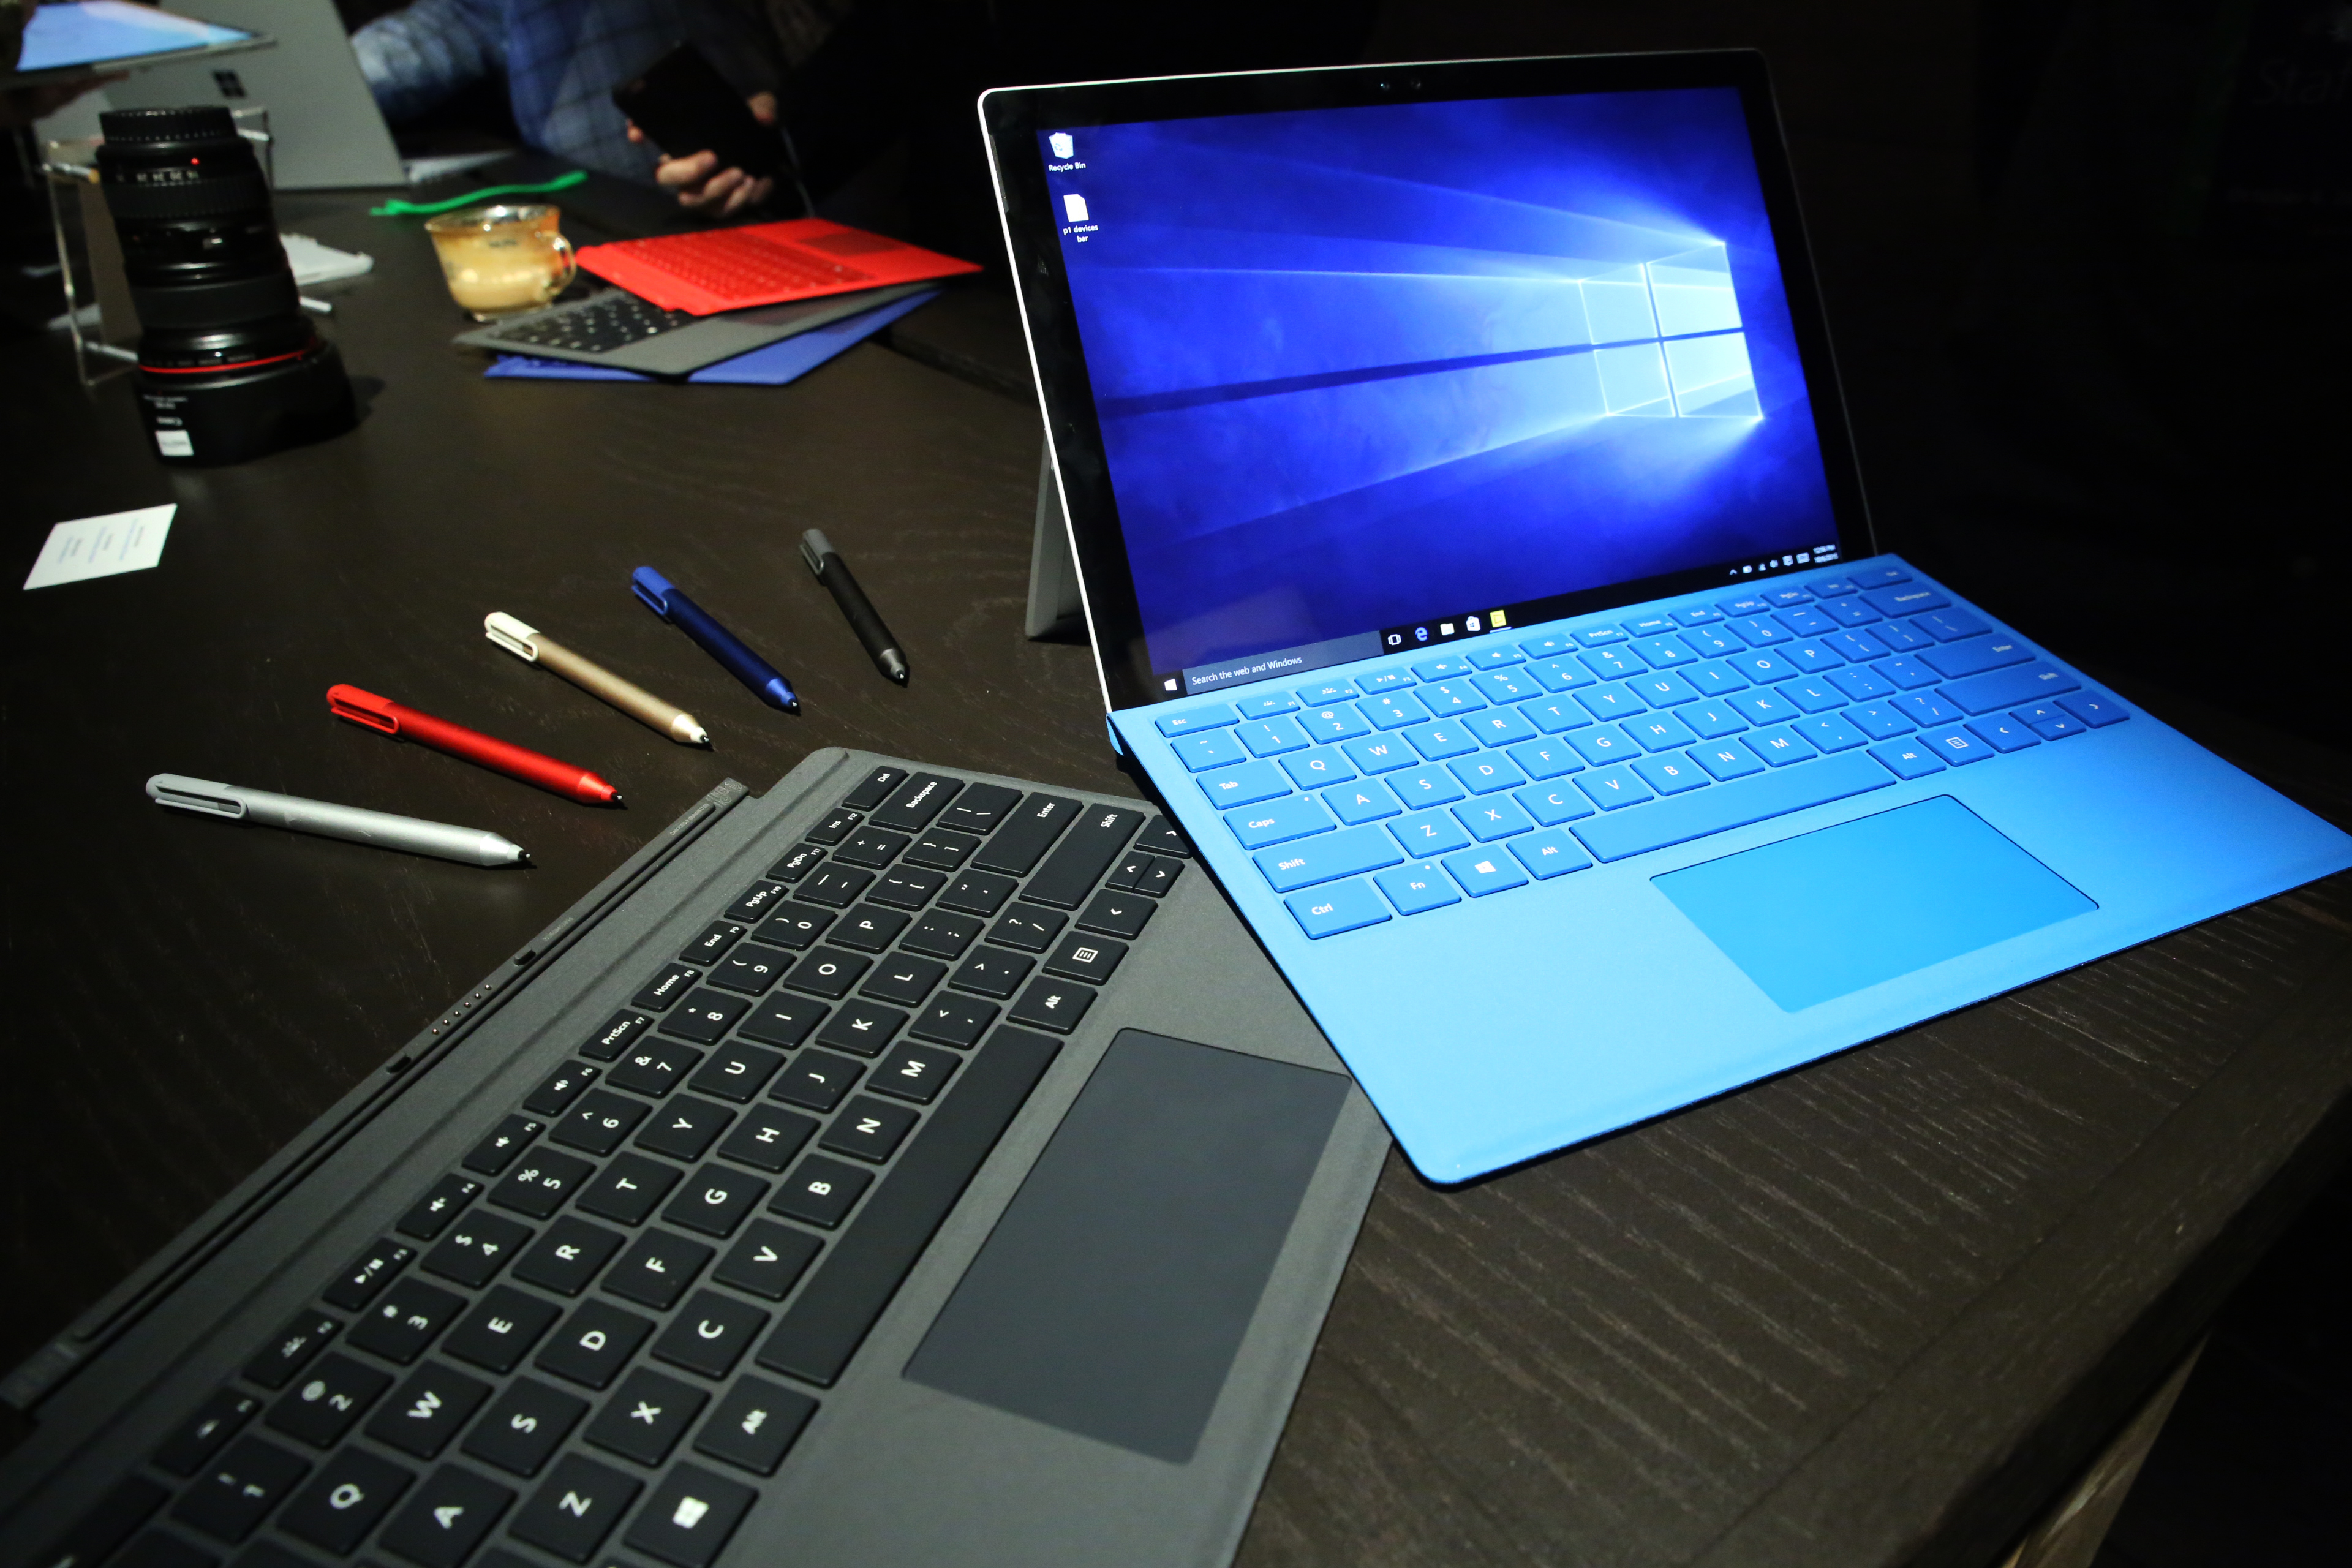 Microsoft Surface Pro 4 Tabletop